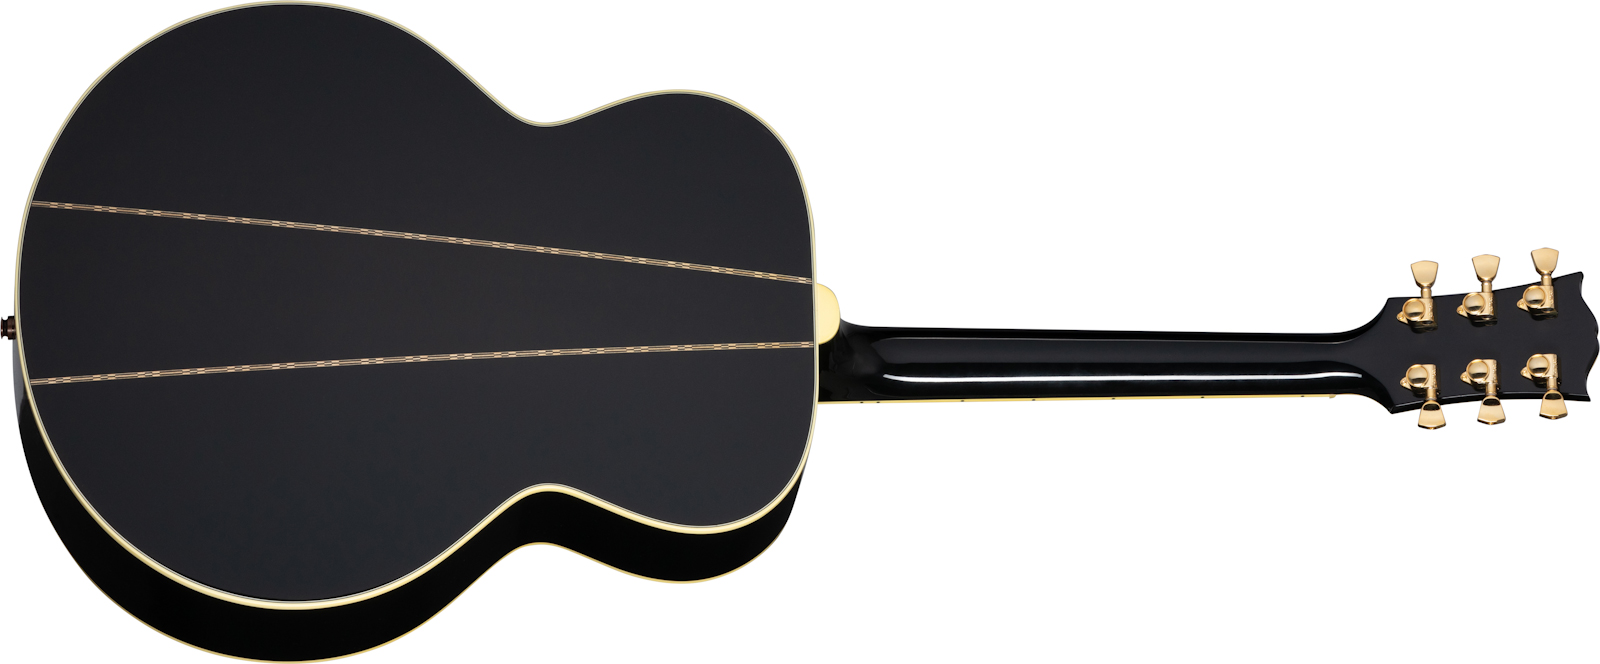 Gibson Custom Shop Elvis Presley Sj-200 Signature Jumbo Epicea Palissandre Rw - Ebony - Guitare Acoustique - Variation 1